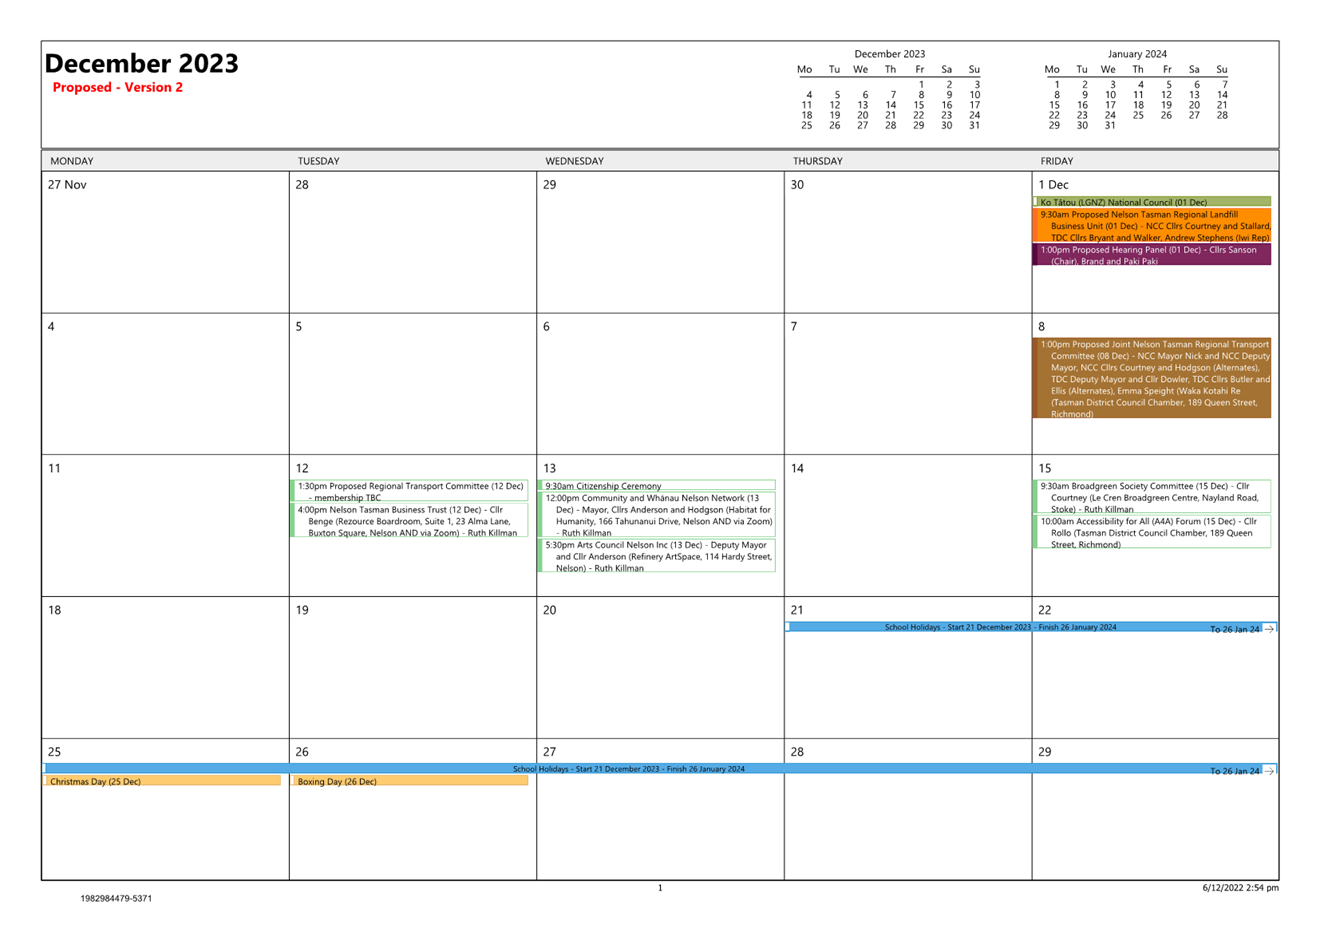 Calendar

Description automatically generated